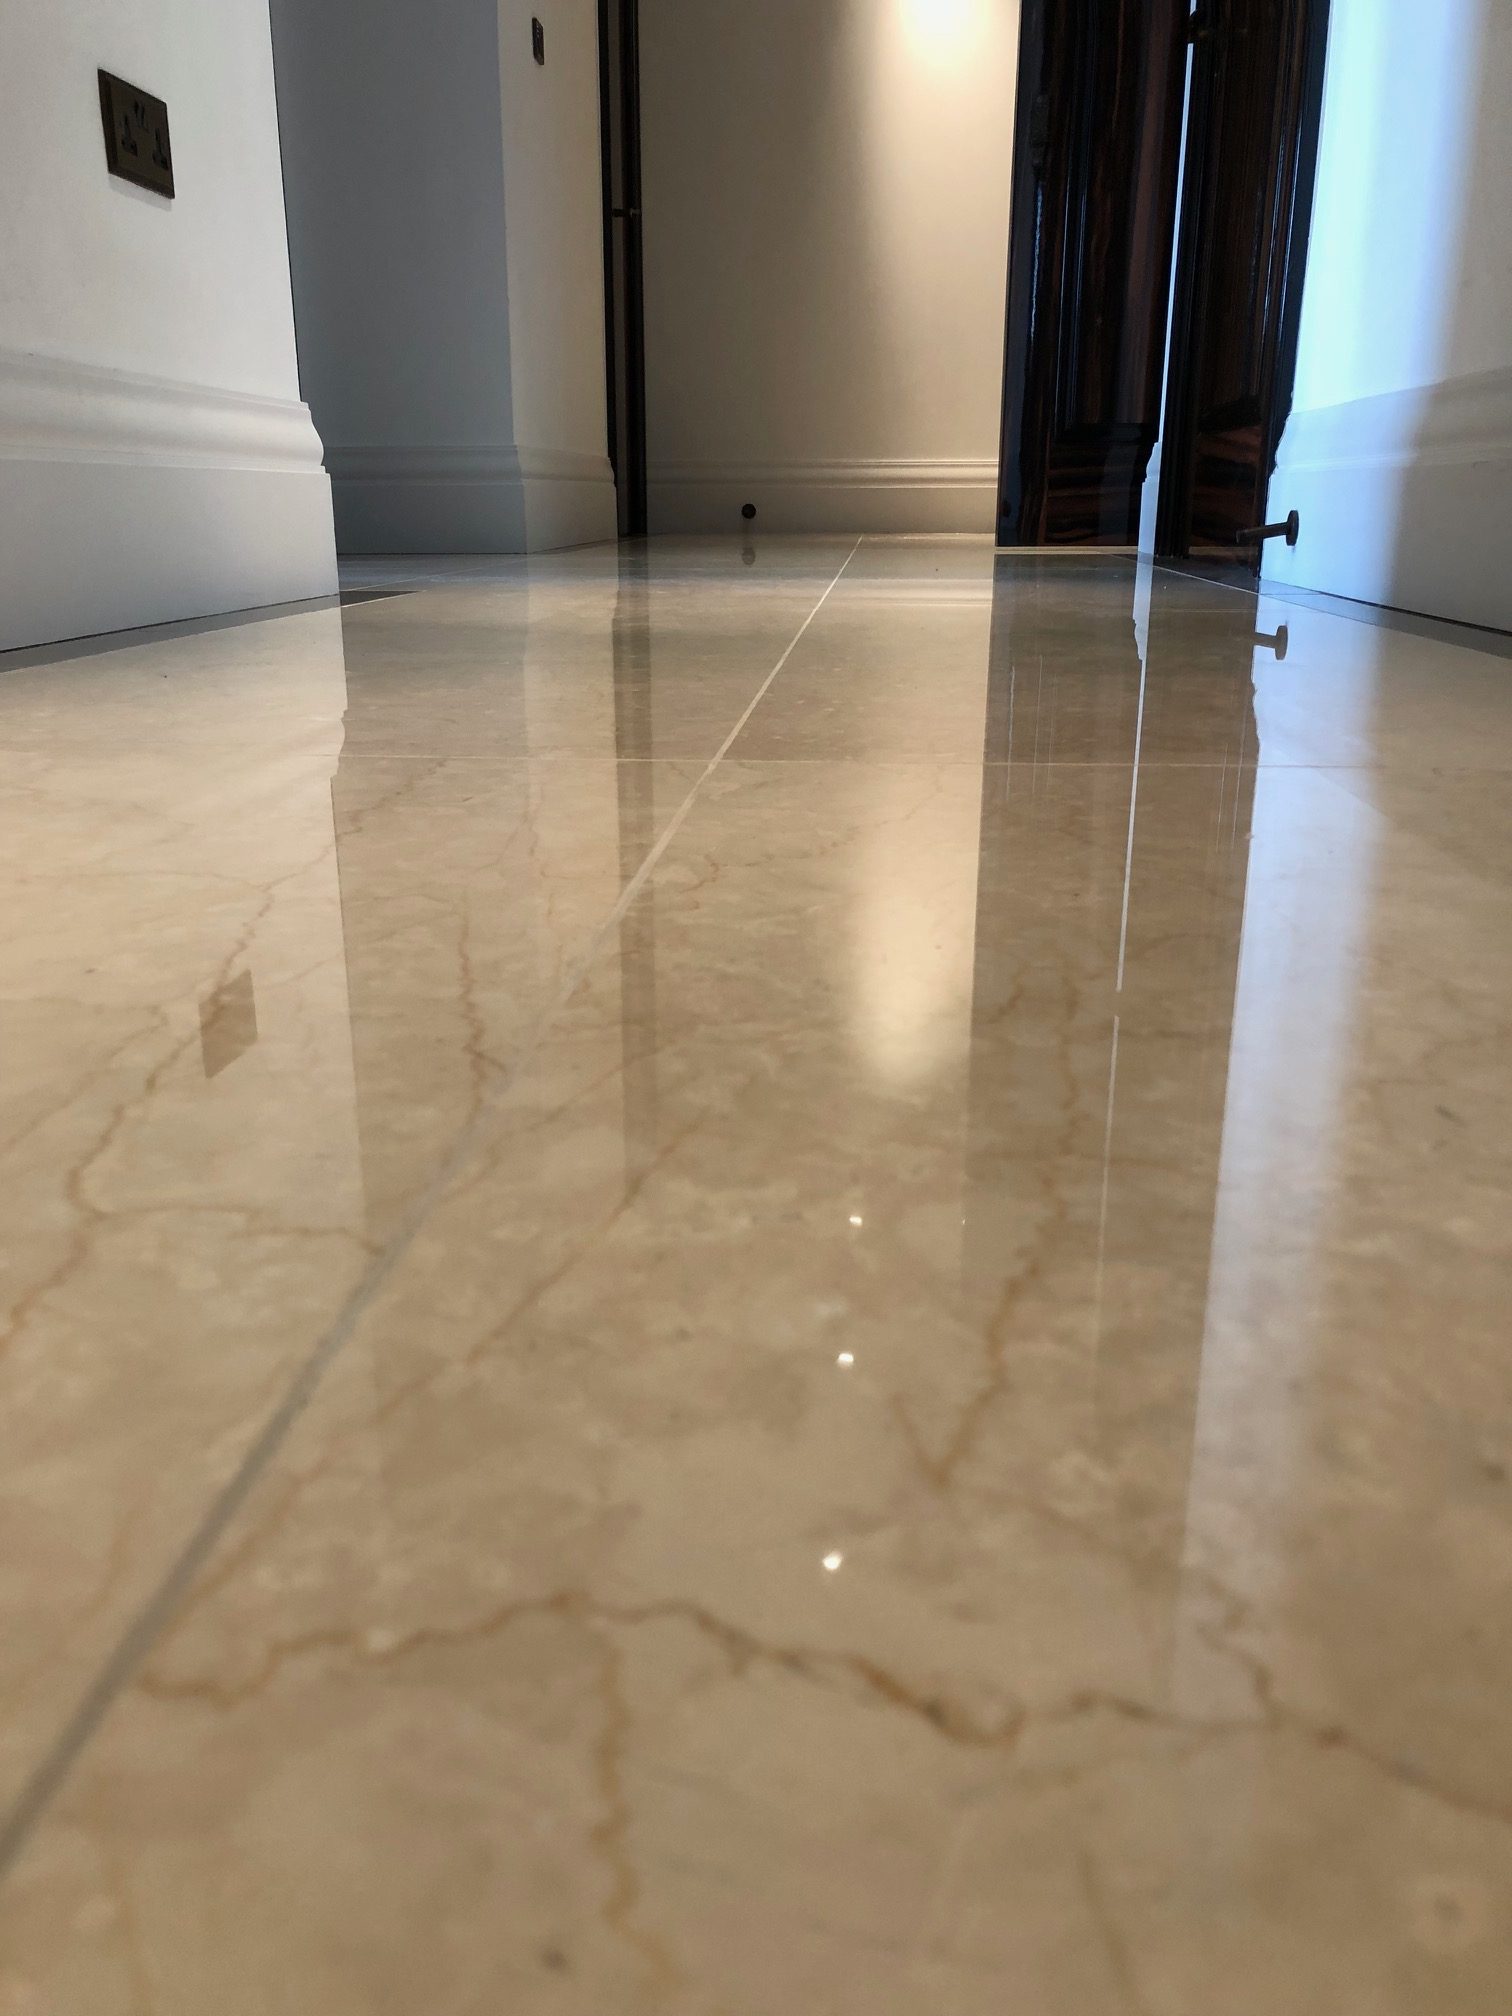 Marble floor after polishing